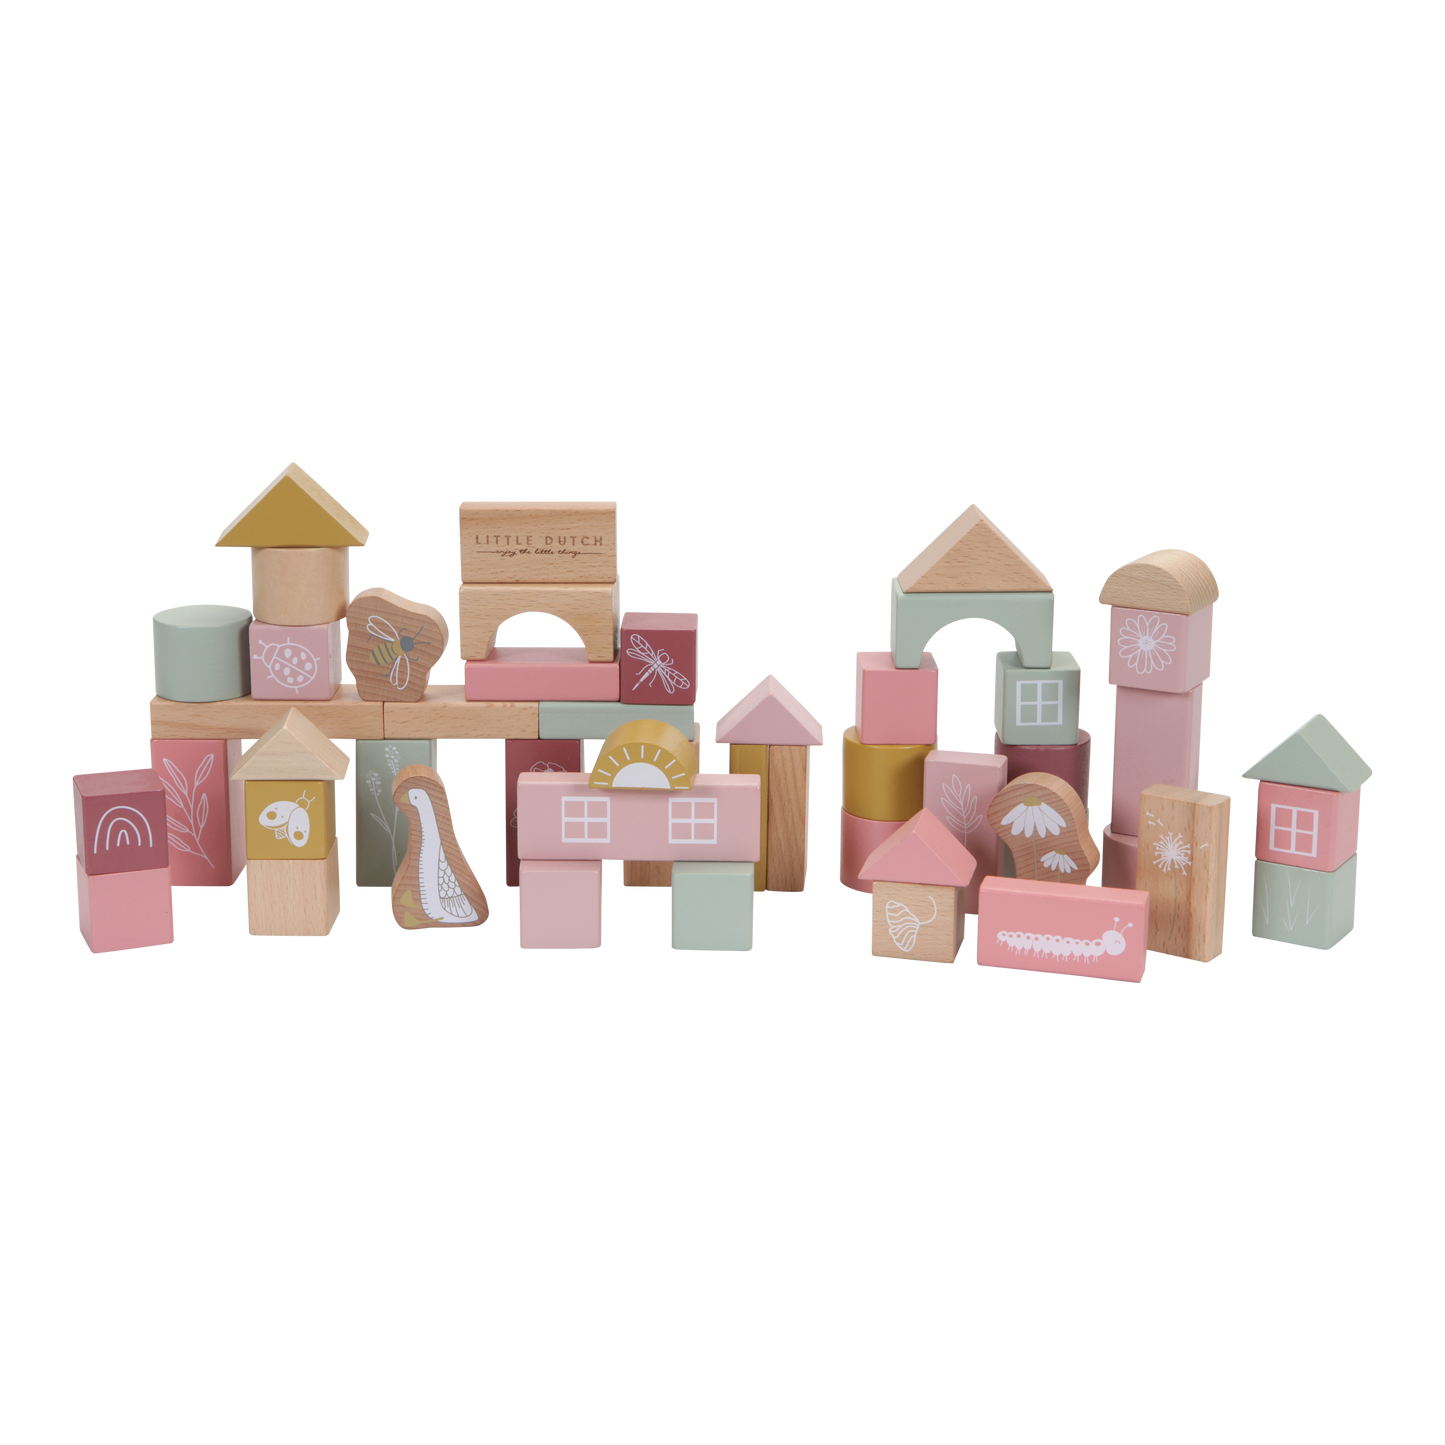 Little Dutch Building Blocks Pink